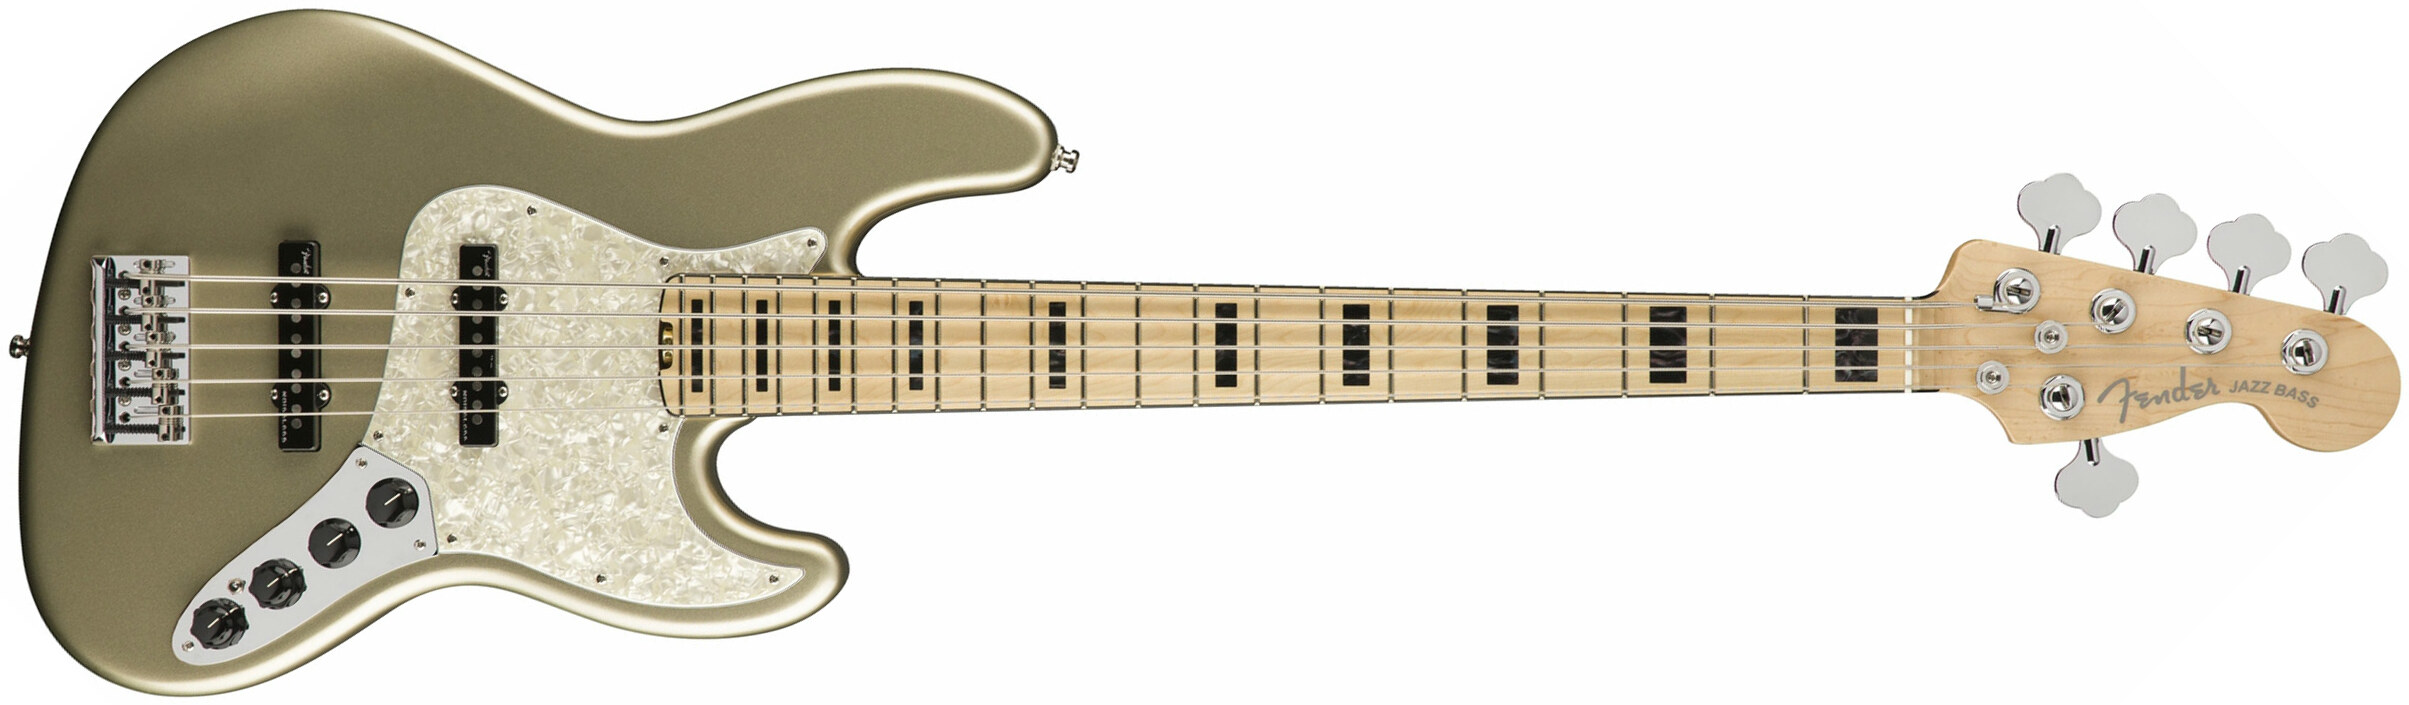 Fender American Elite Jazz Bass V Usa Mn - Champagne - Solid body elektrische bas - Main picture